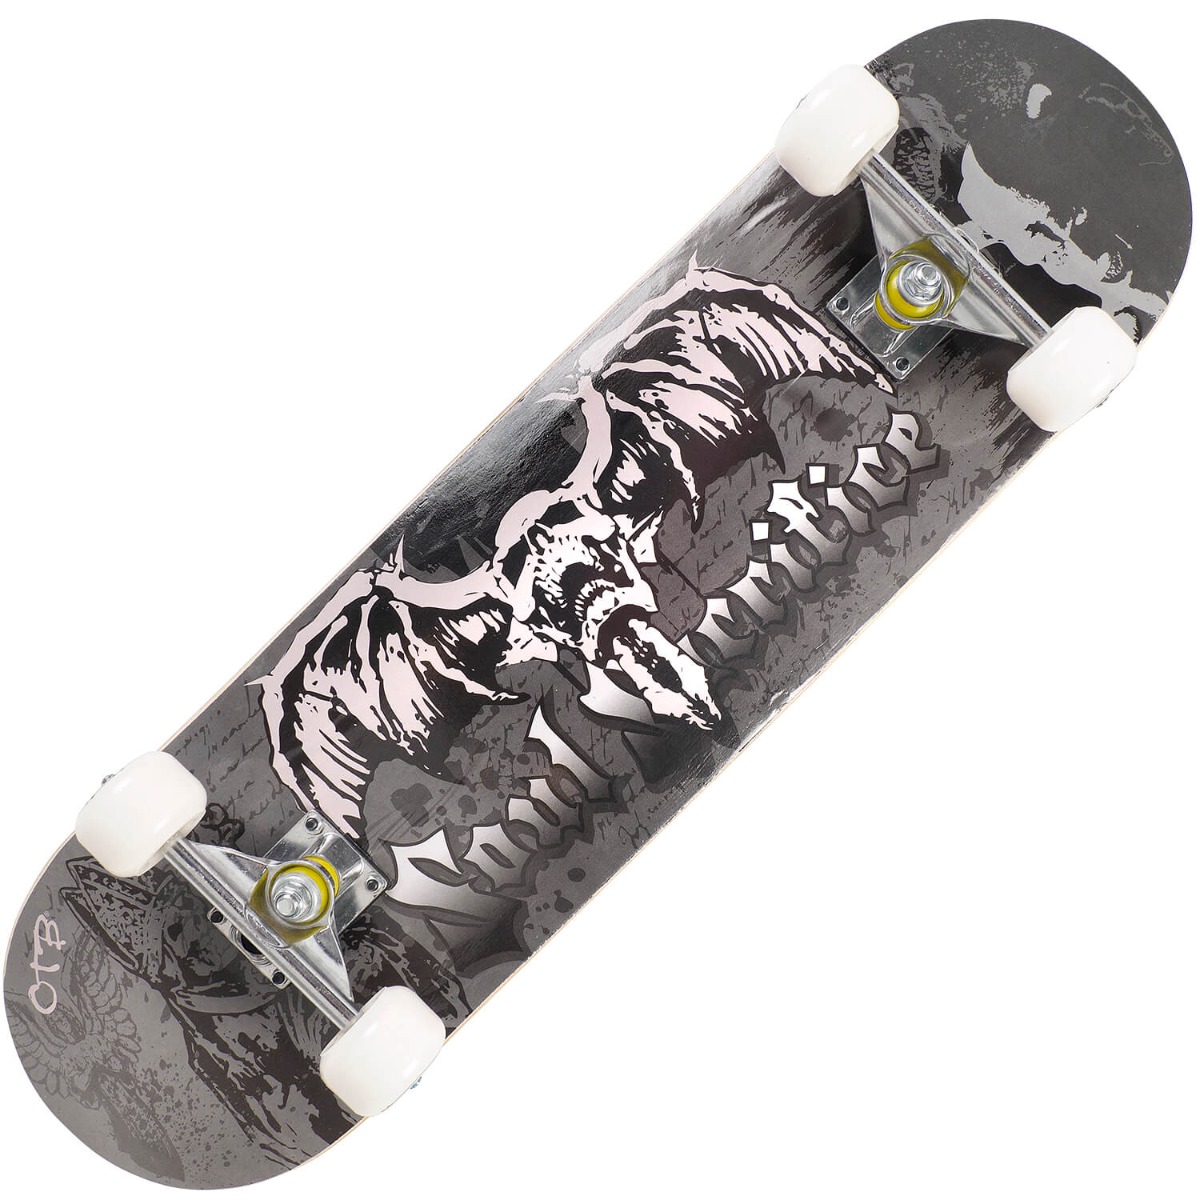 Poze Skateboard Sacrifice, Action One, Abec-7, Aluminiu, 79x20 cm, multicolor